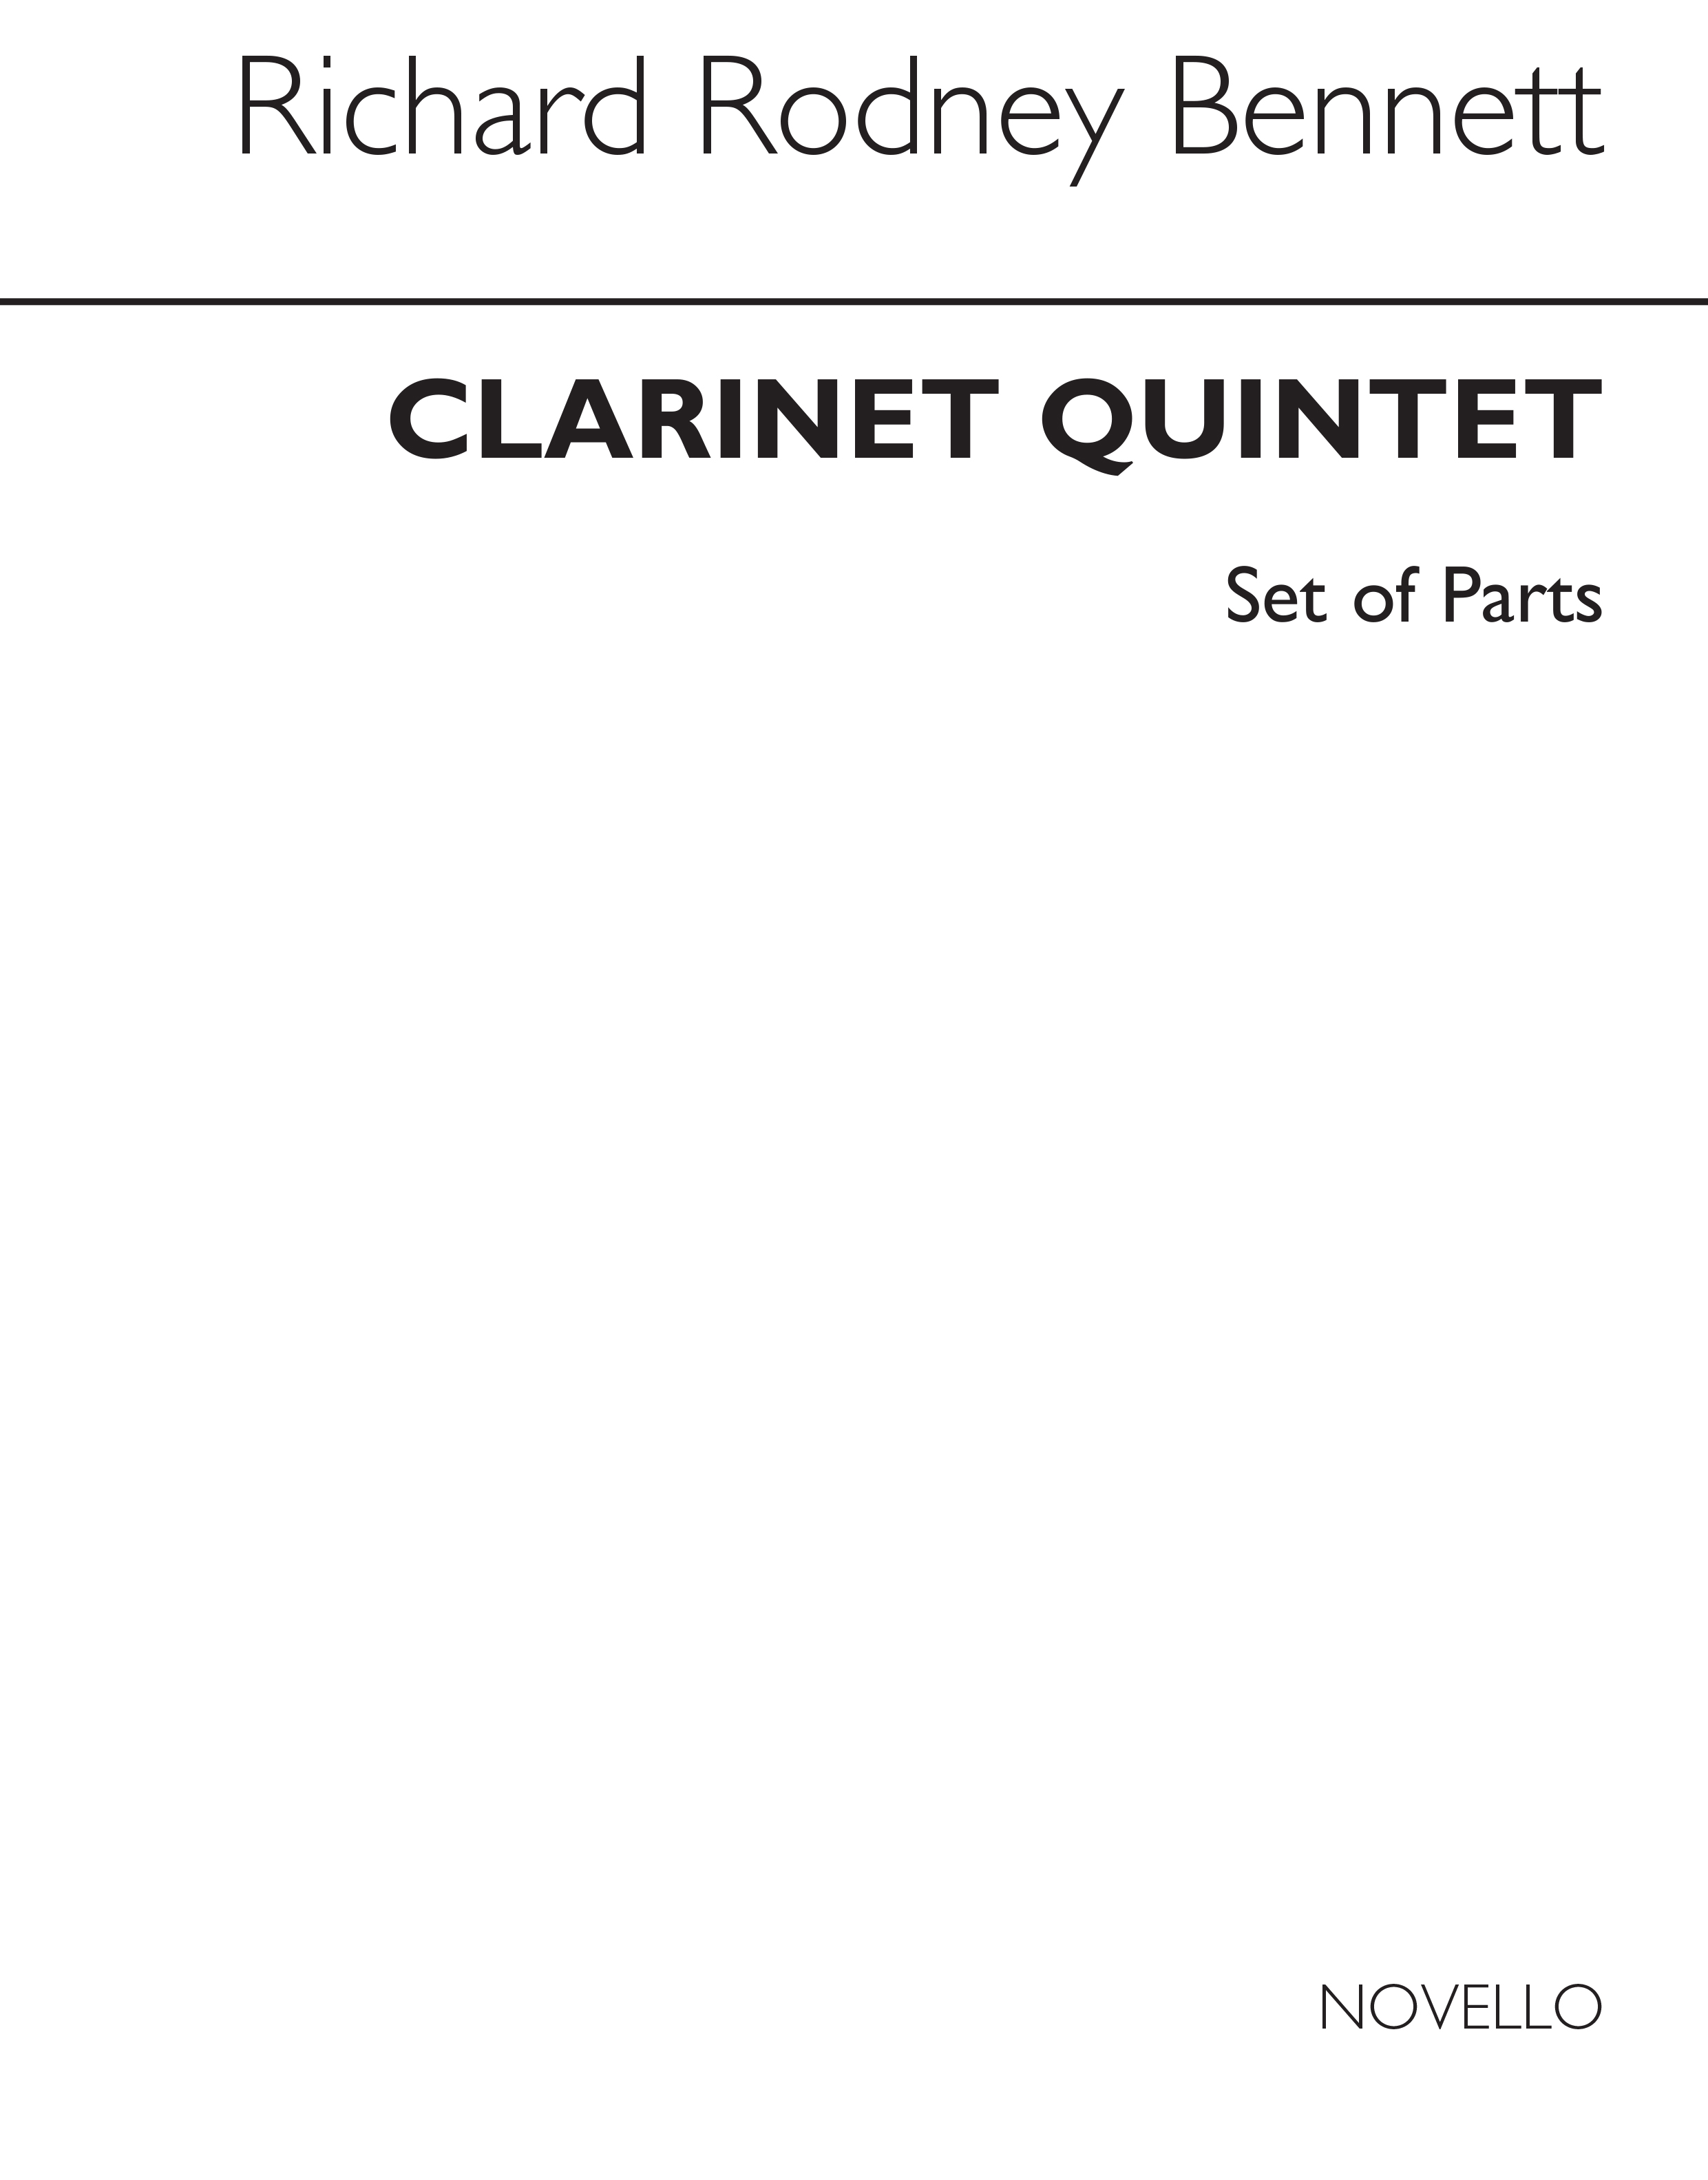 RR Bennett: Clarinet Quintet (Parts)